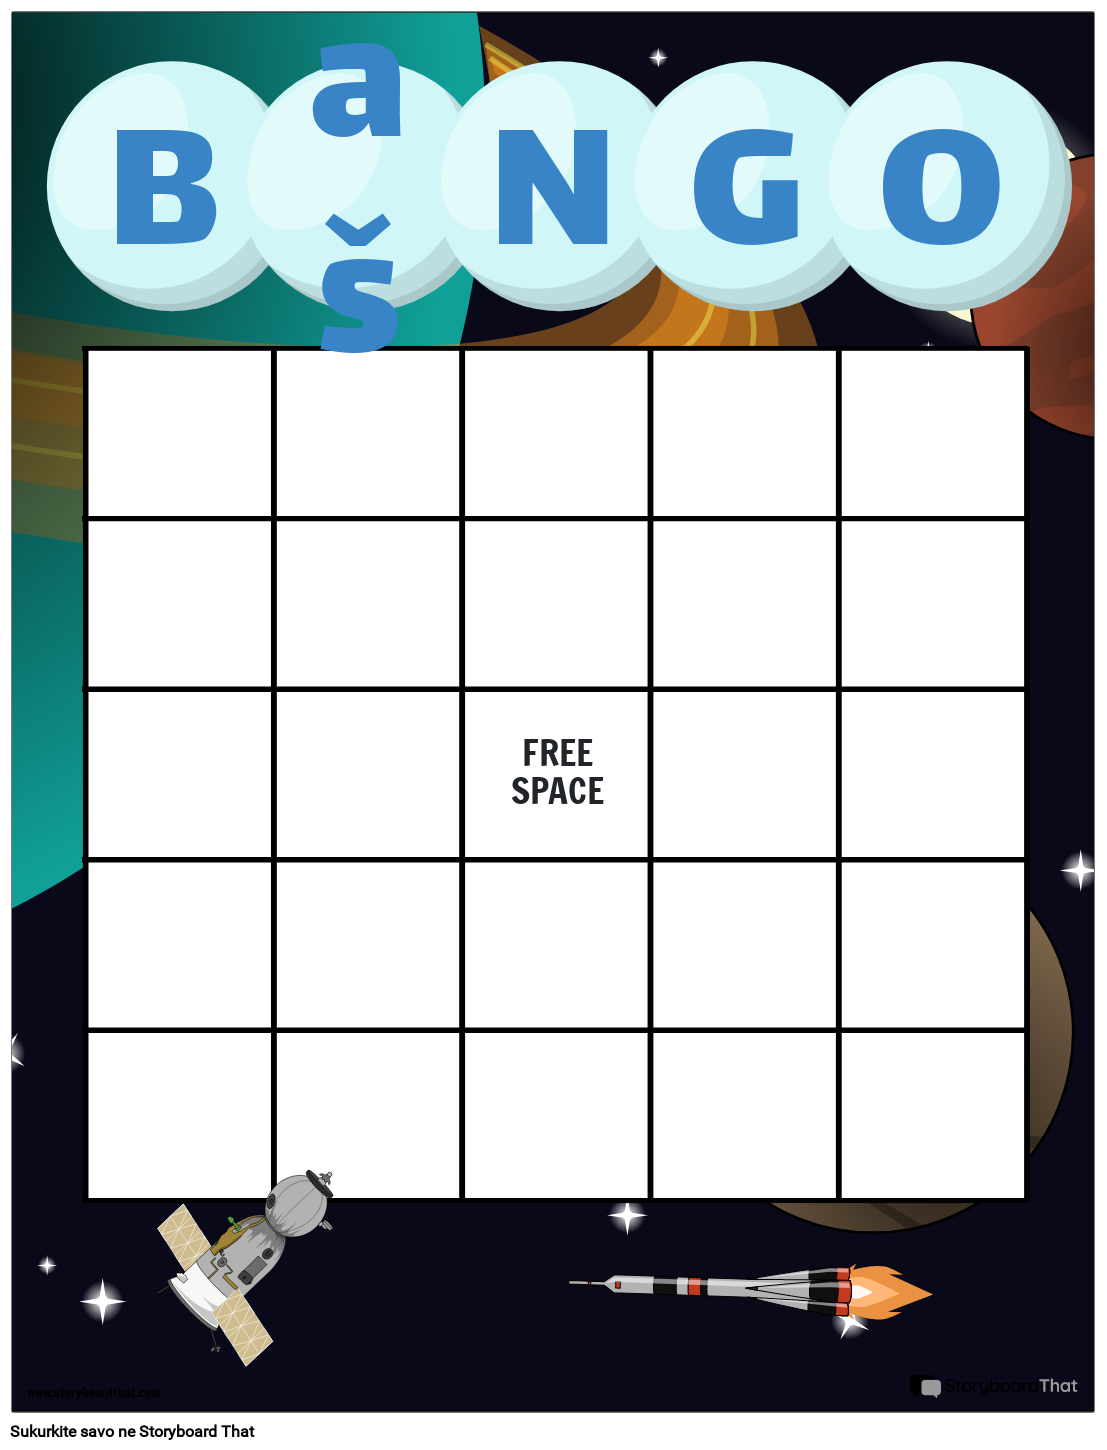 bingo-lenta-2-storyboard-par-lt-examples